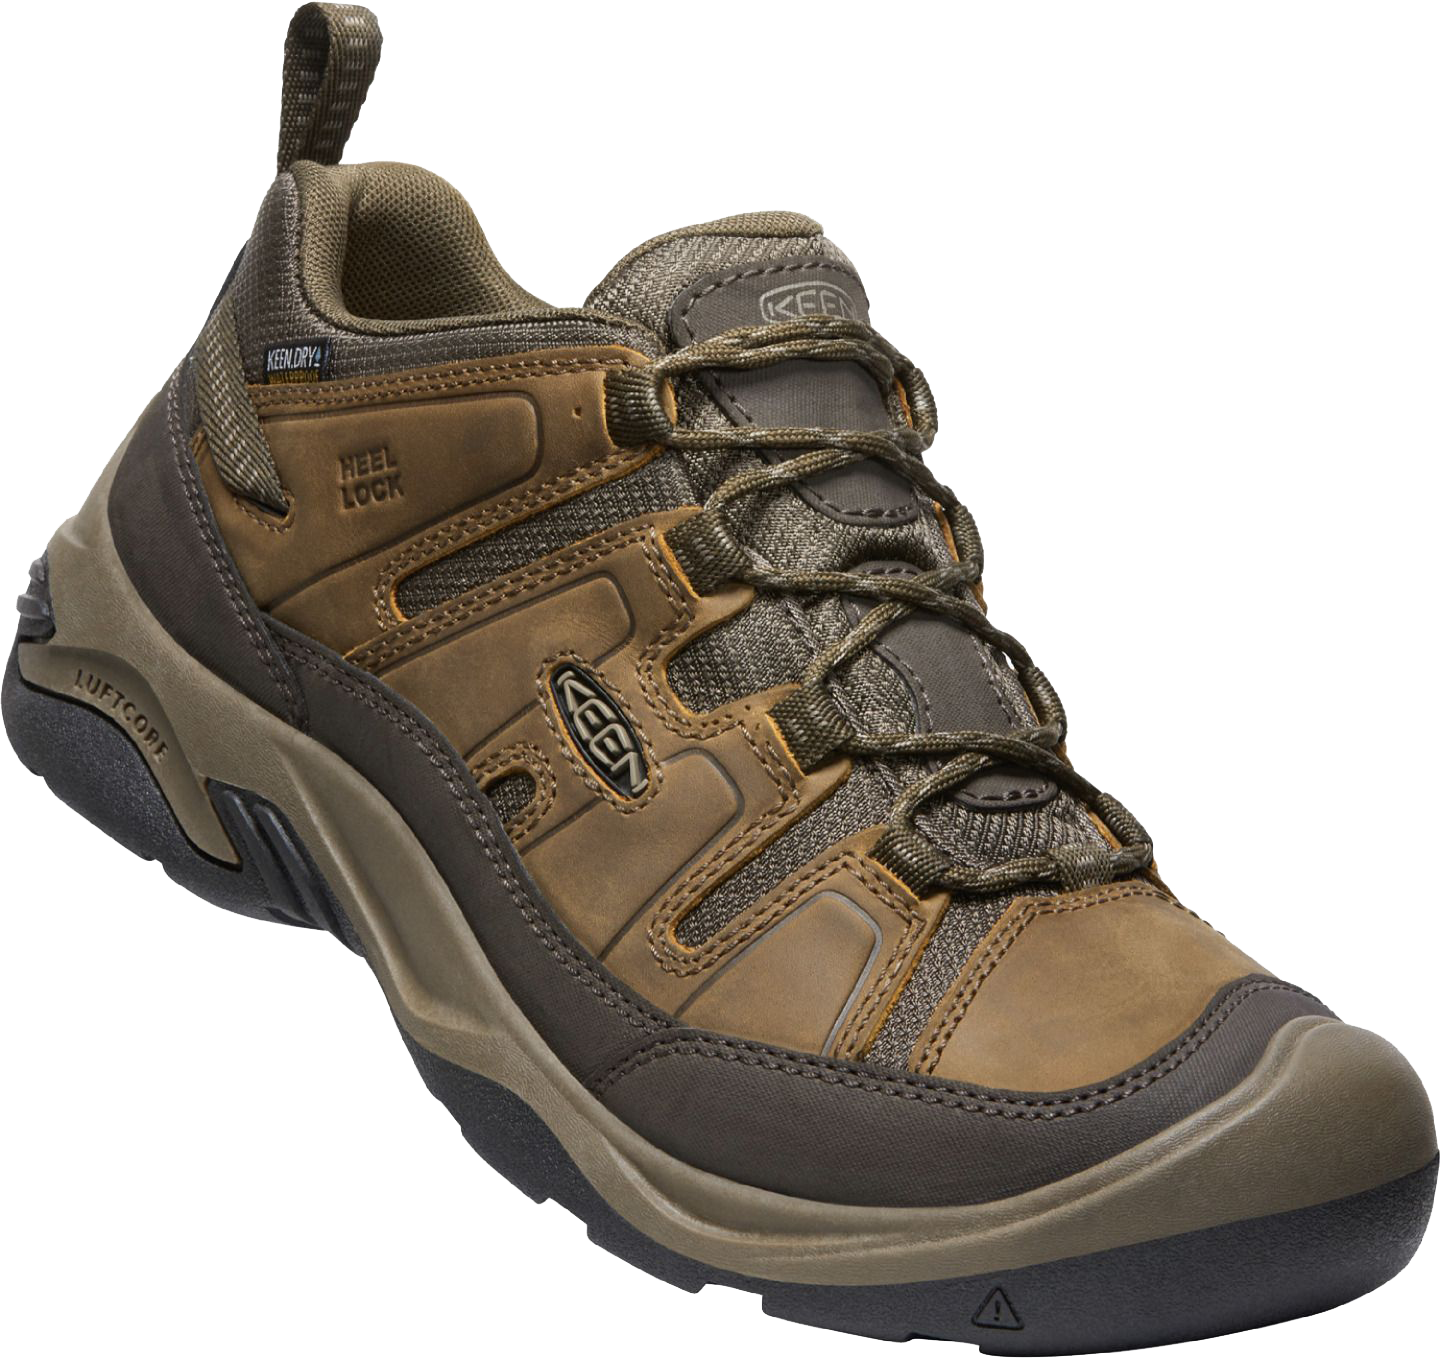 KEEN Circadia Low WP Waterproof Hiking Shoes for Men - Shitake/Brindle - 7.5W